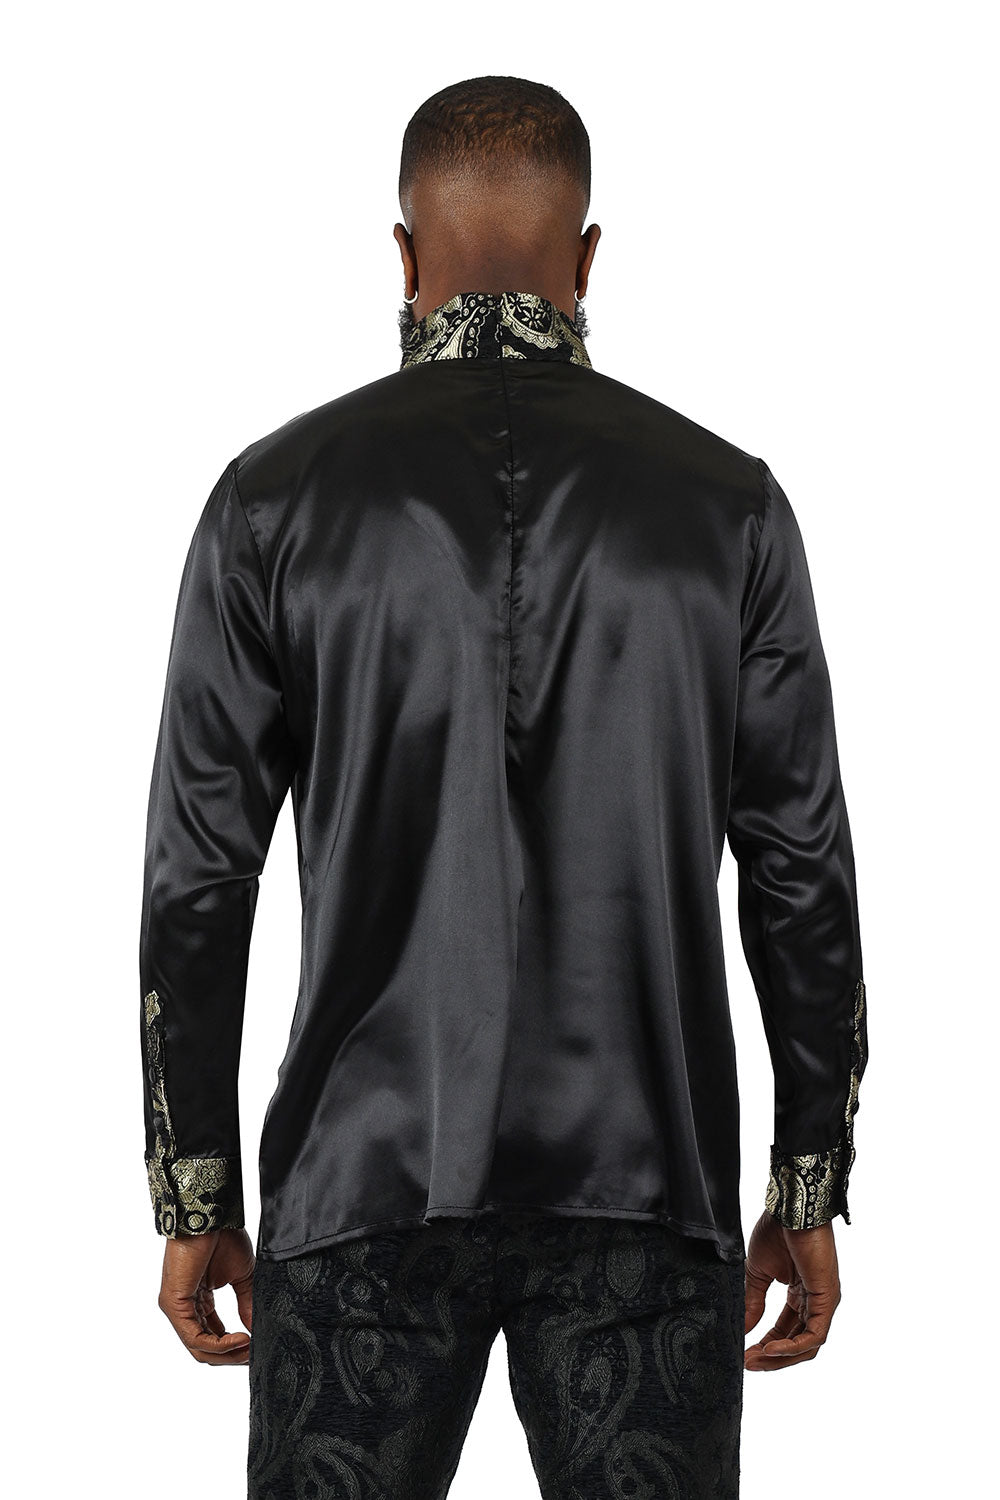 BARABAS Men's Paisley Long Sleeve Turtle Neck shirt 3MT05 Black and Gold